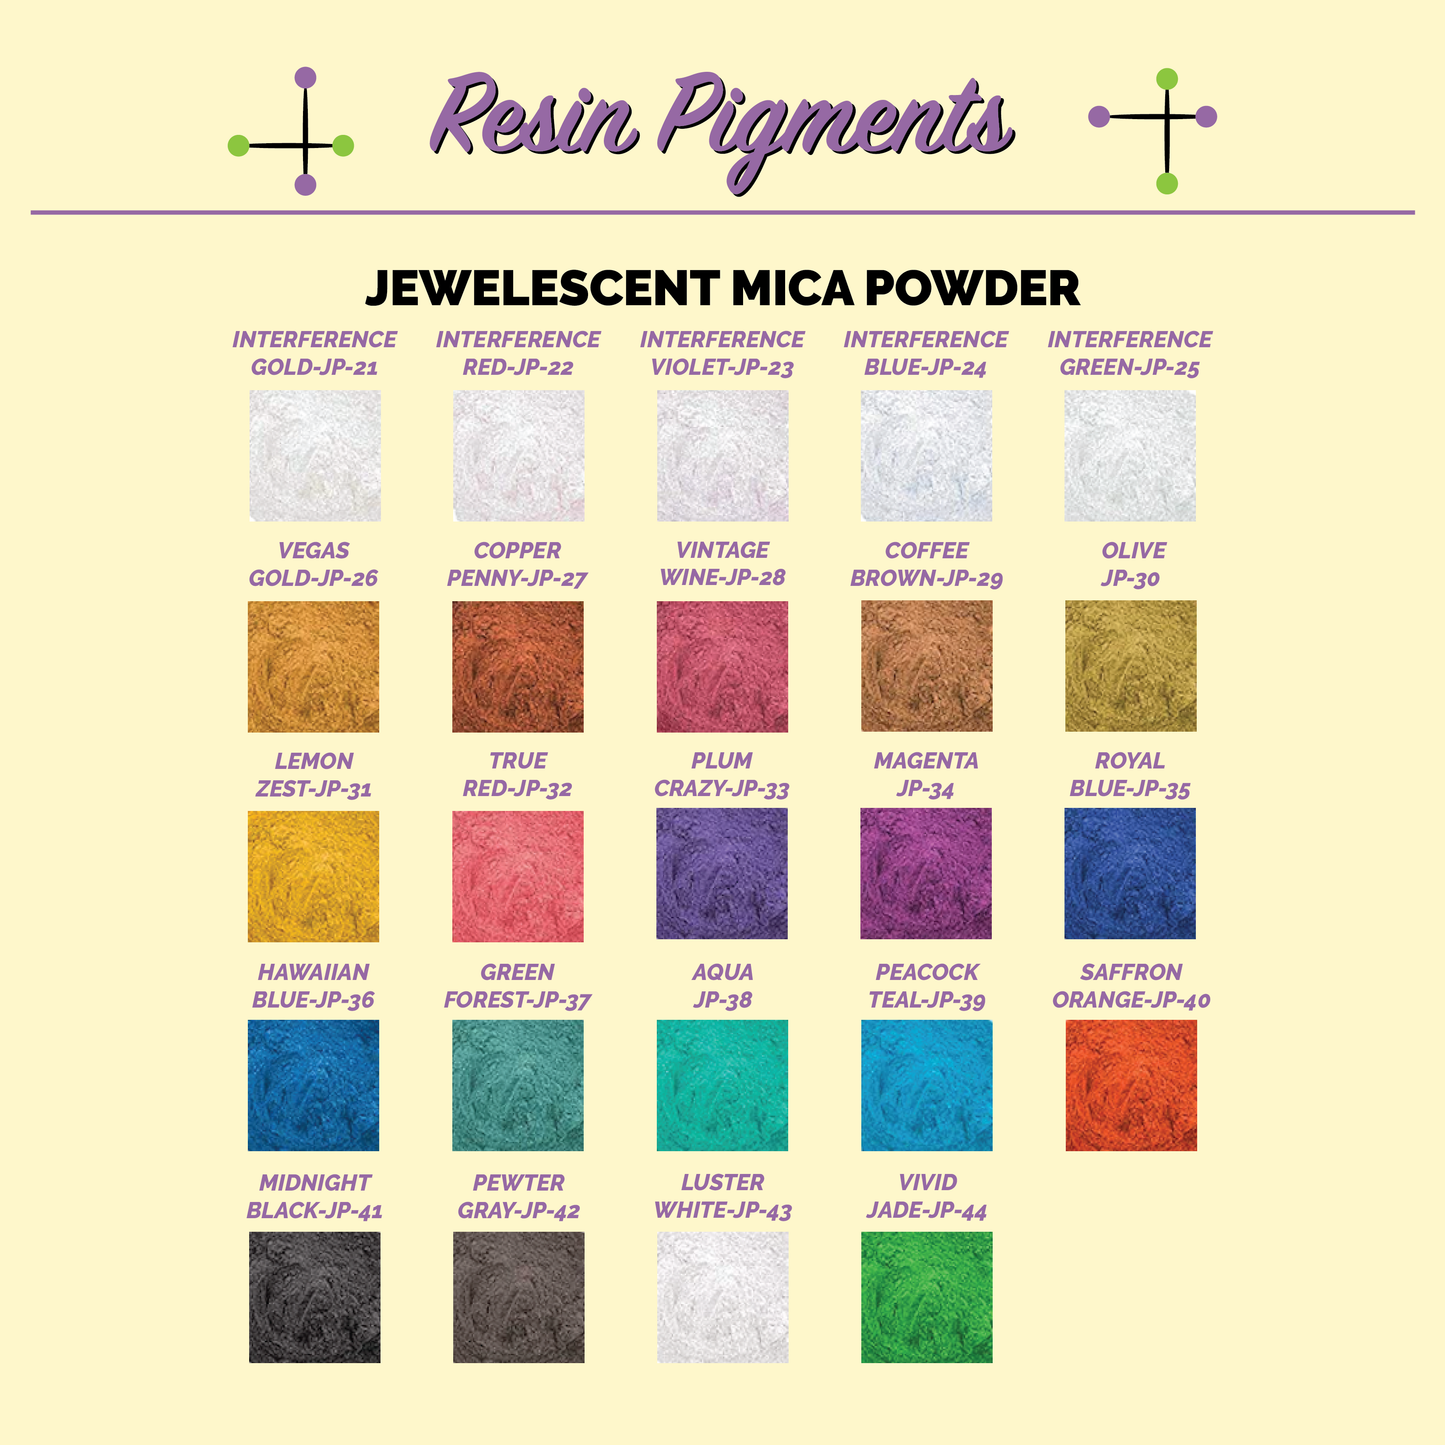 Resin Pigments - mica powder